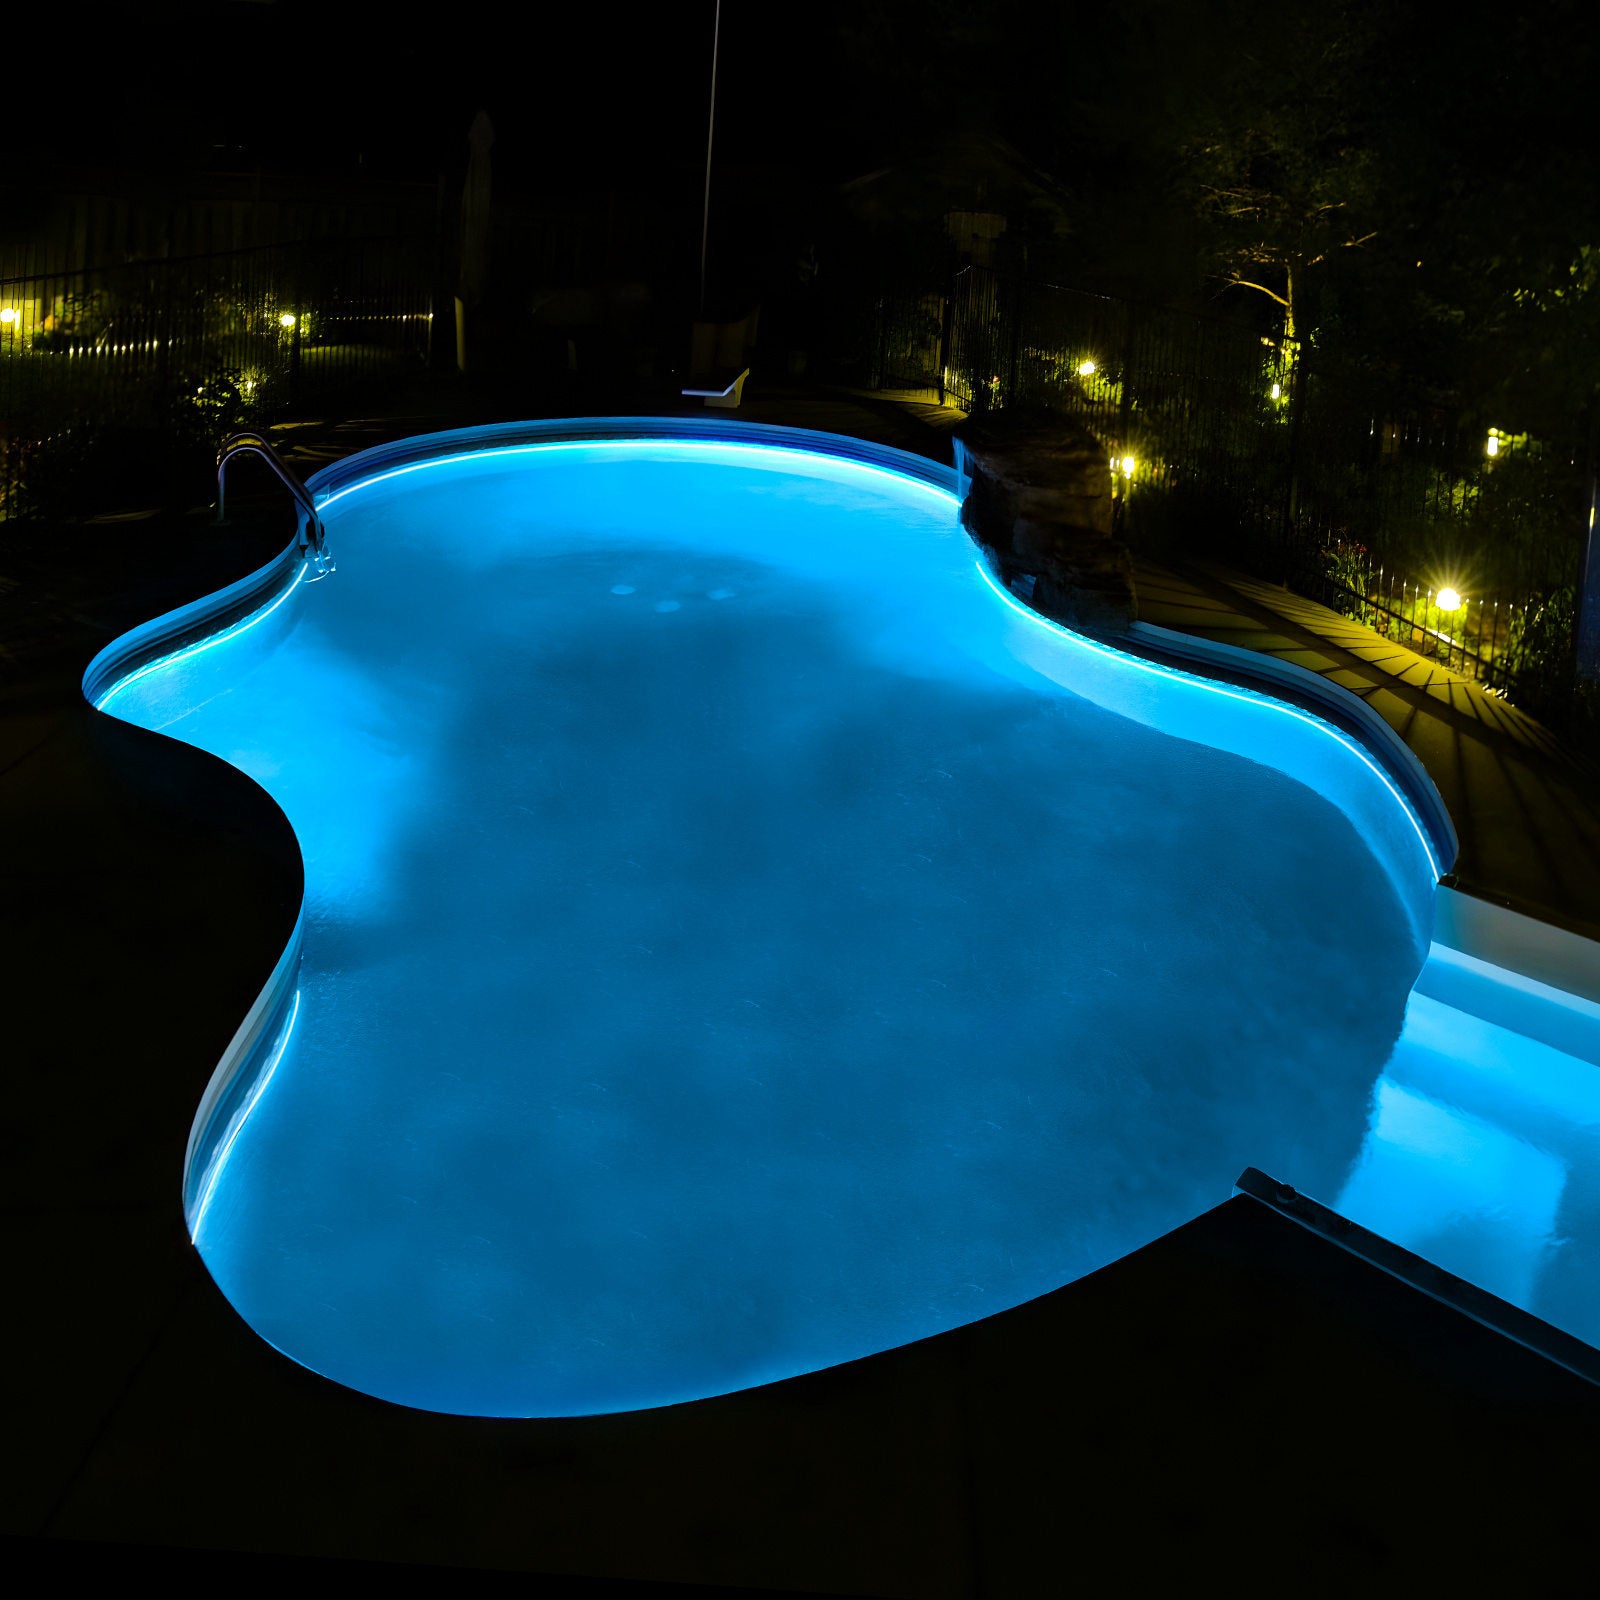 customizable led light strips underwater pool